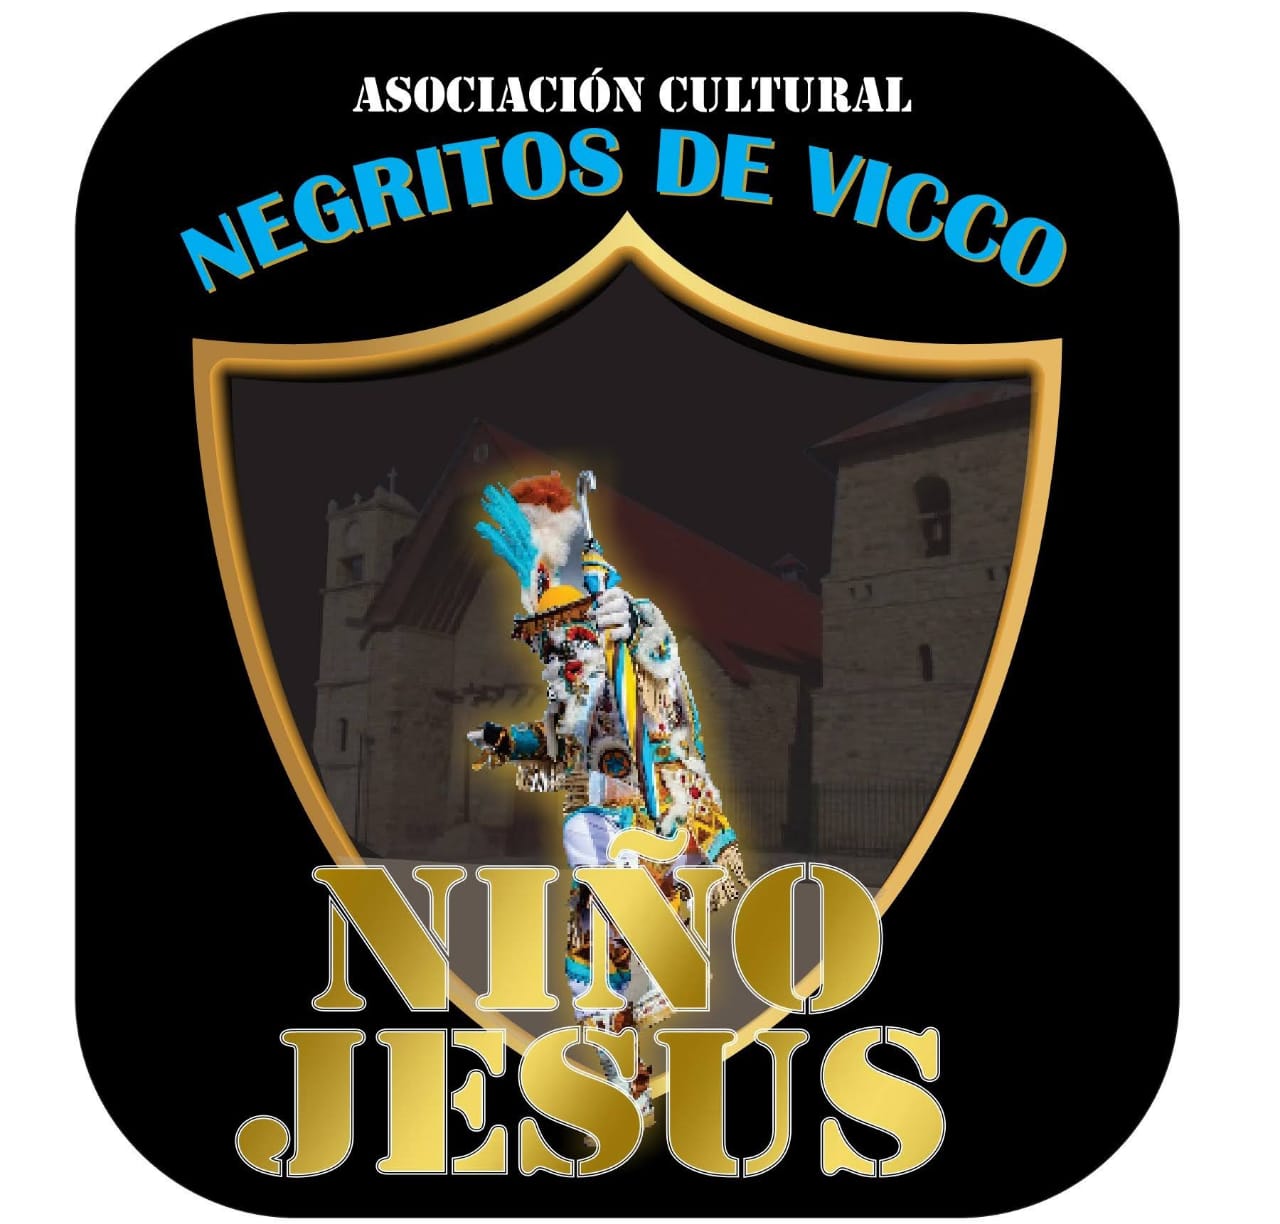 Negritos nino jesus de vicco